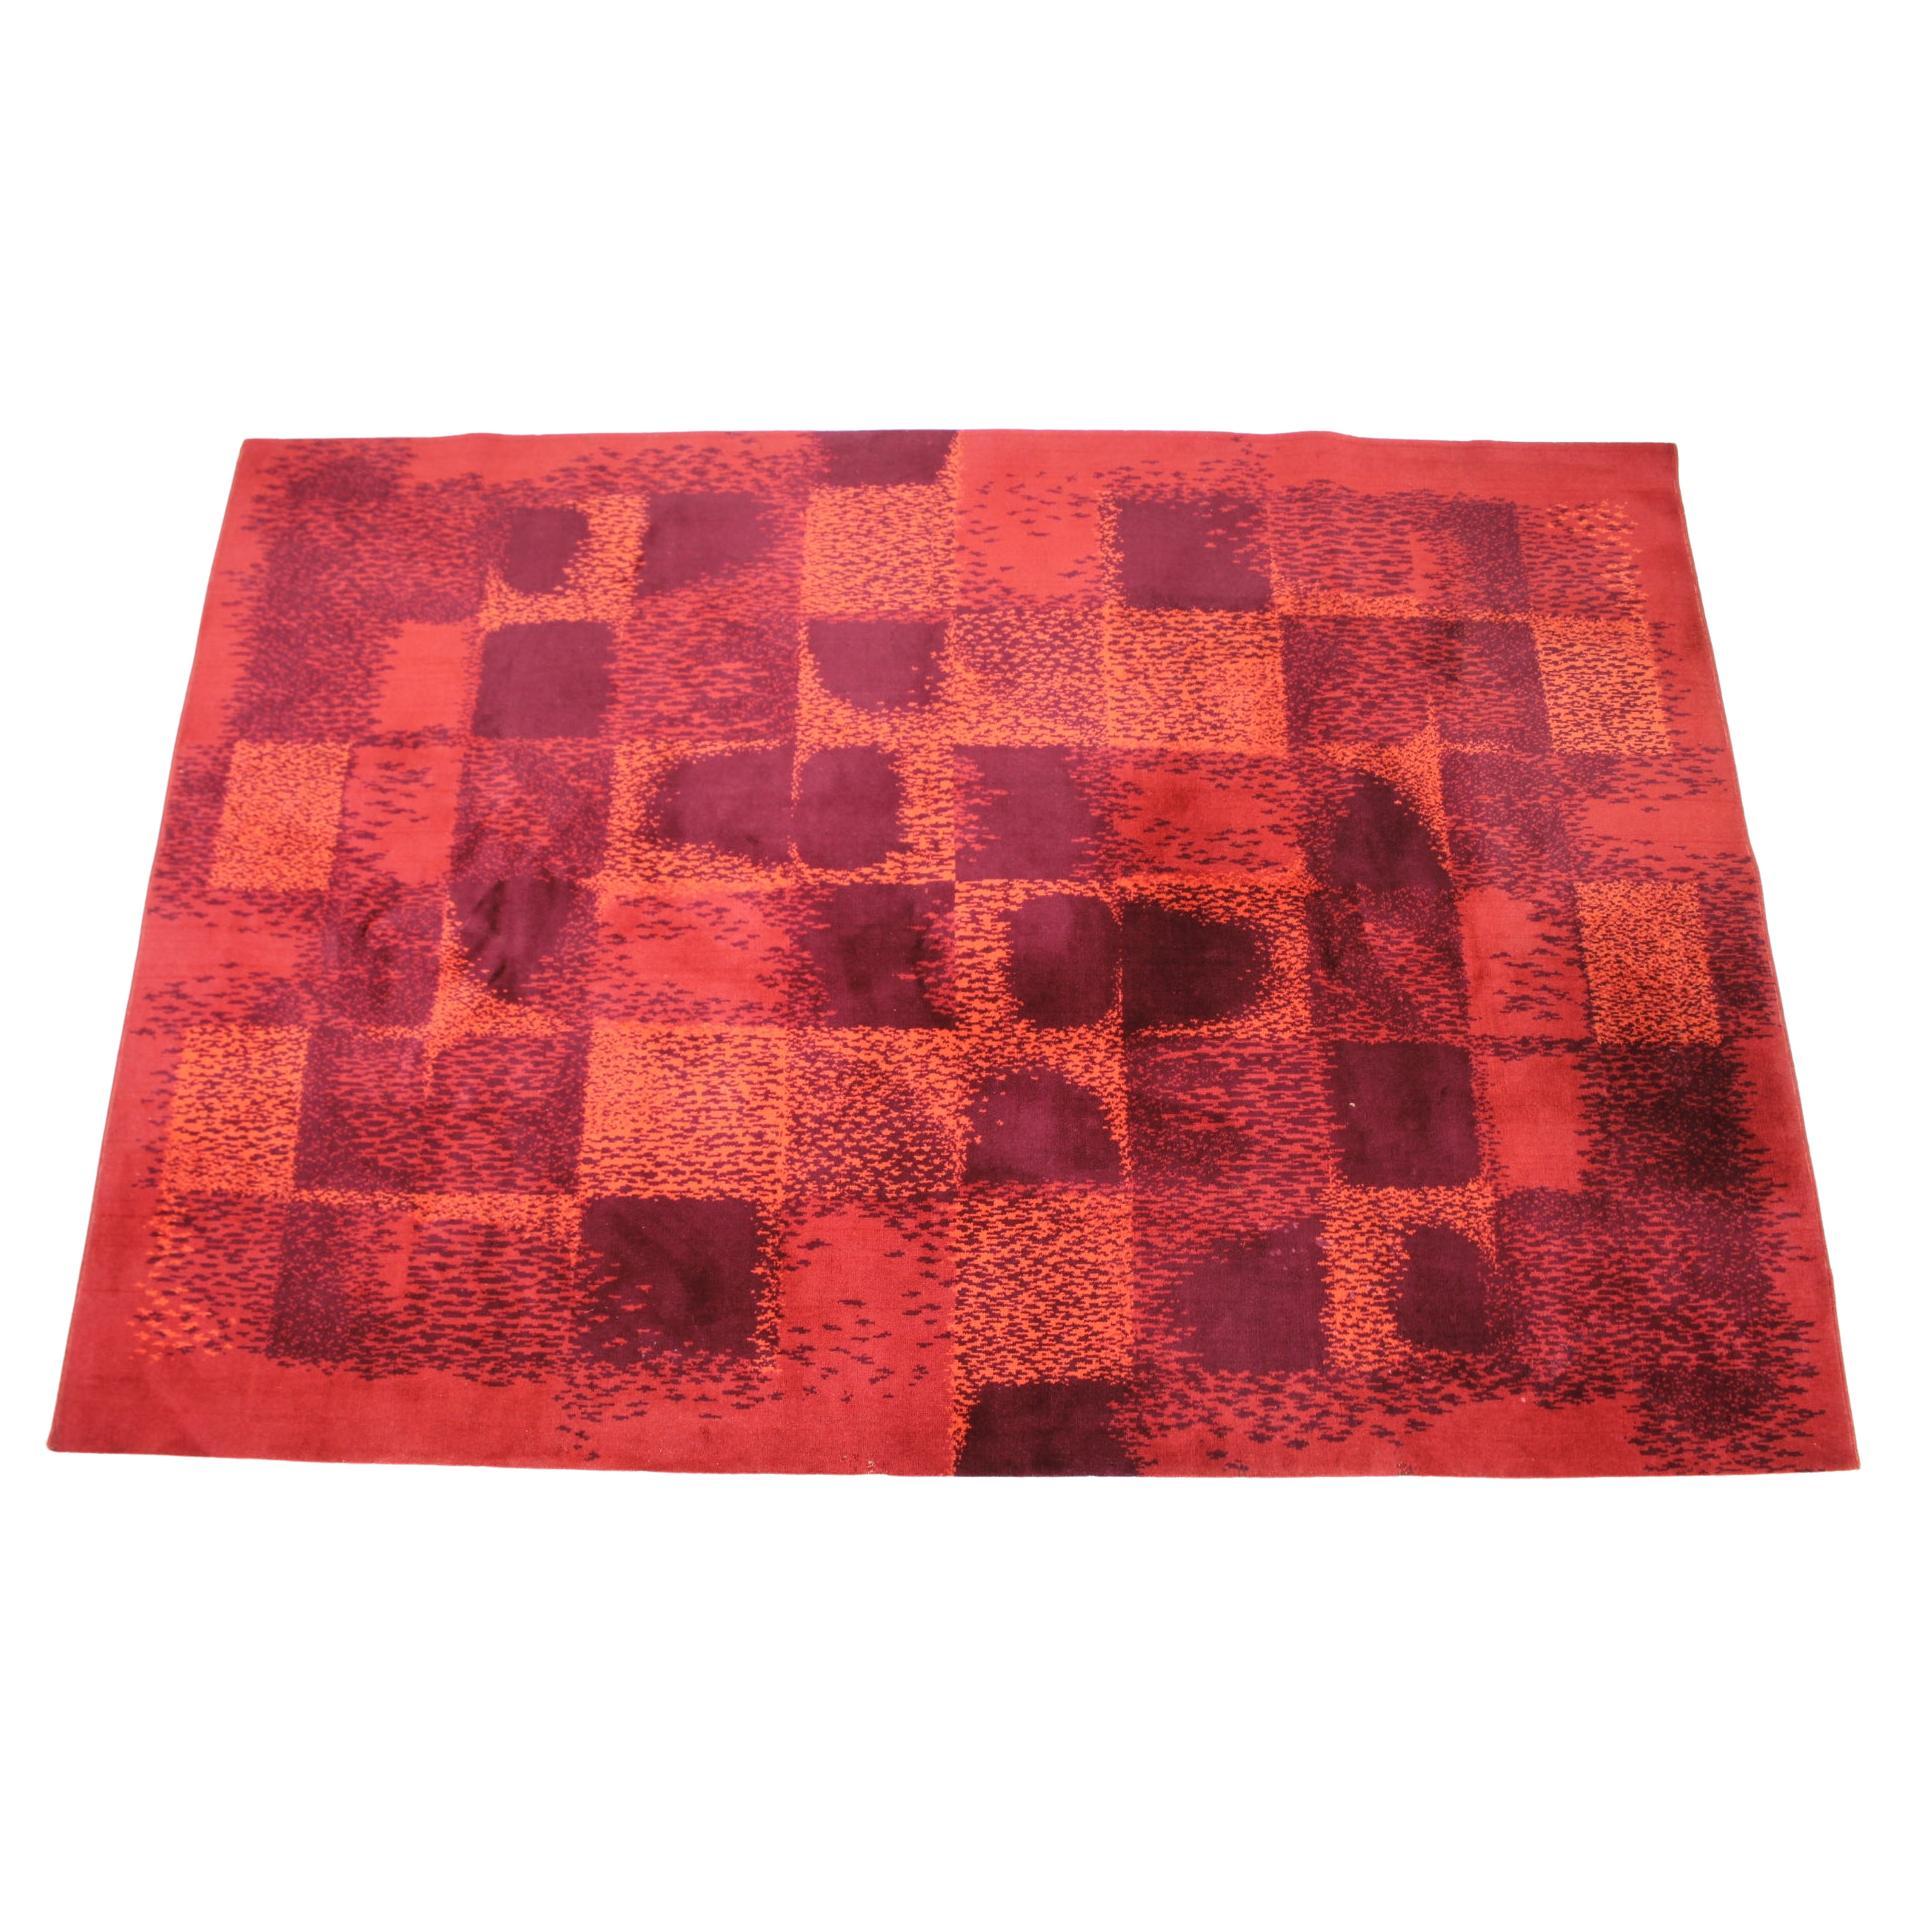 Midcentury Abstract Design Geometric Rug / Carpet, 1970s / Czechoslovakia